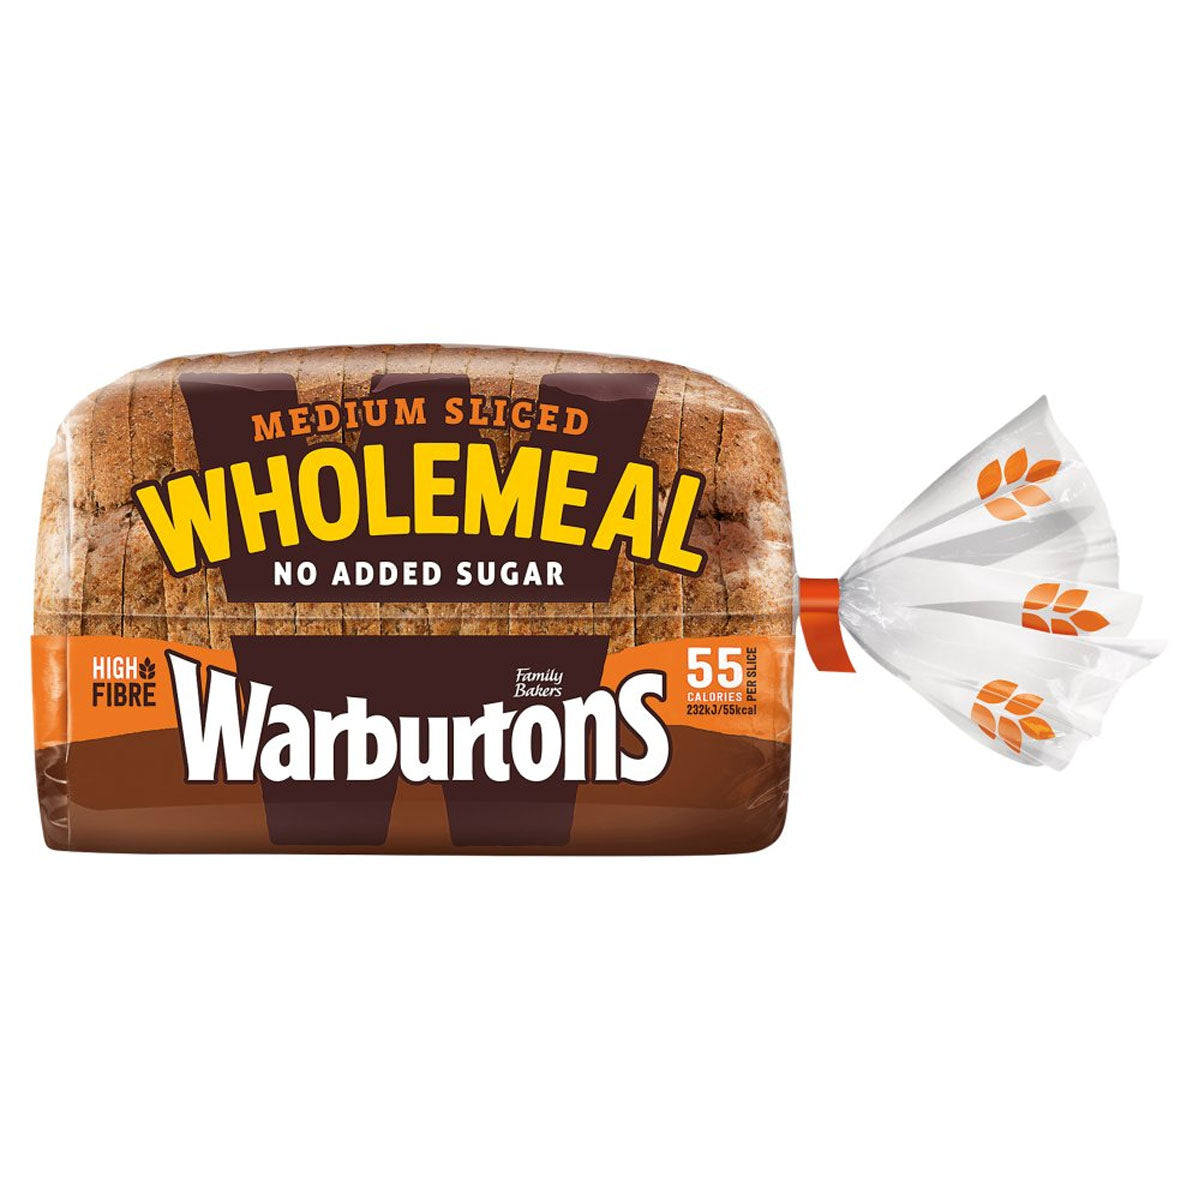 A bag of Warburtons - Medium Sliced Wholemeal Bread - 400g.